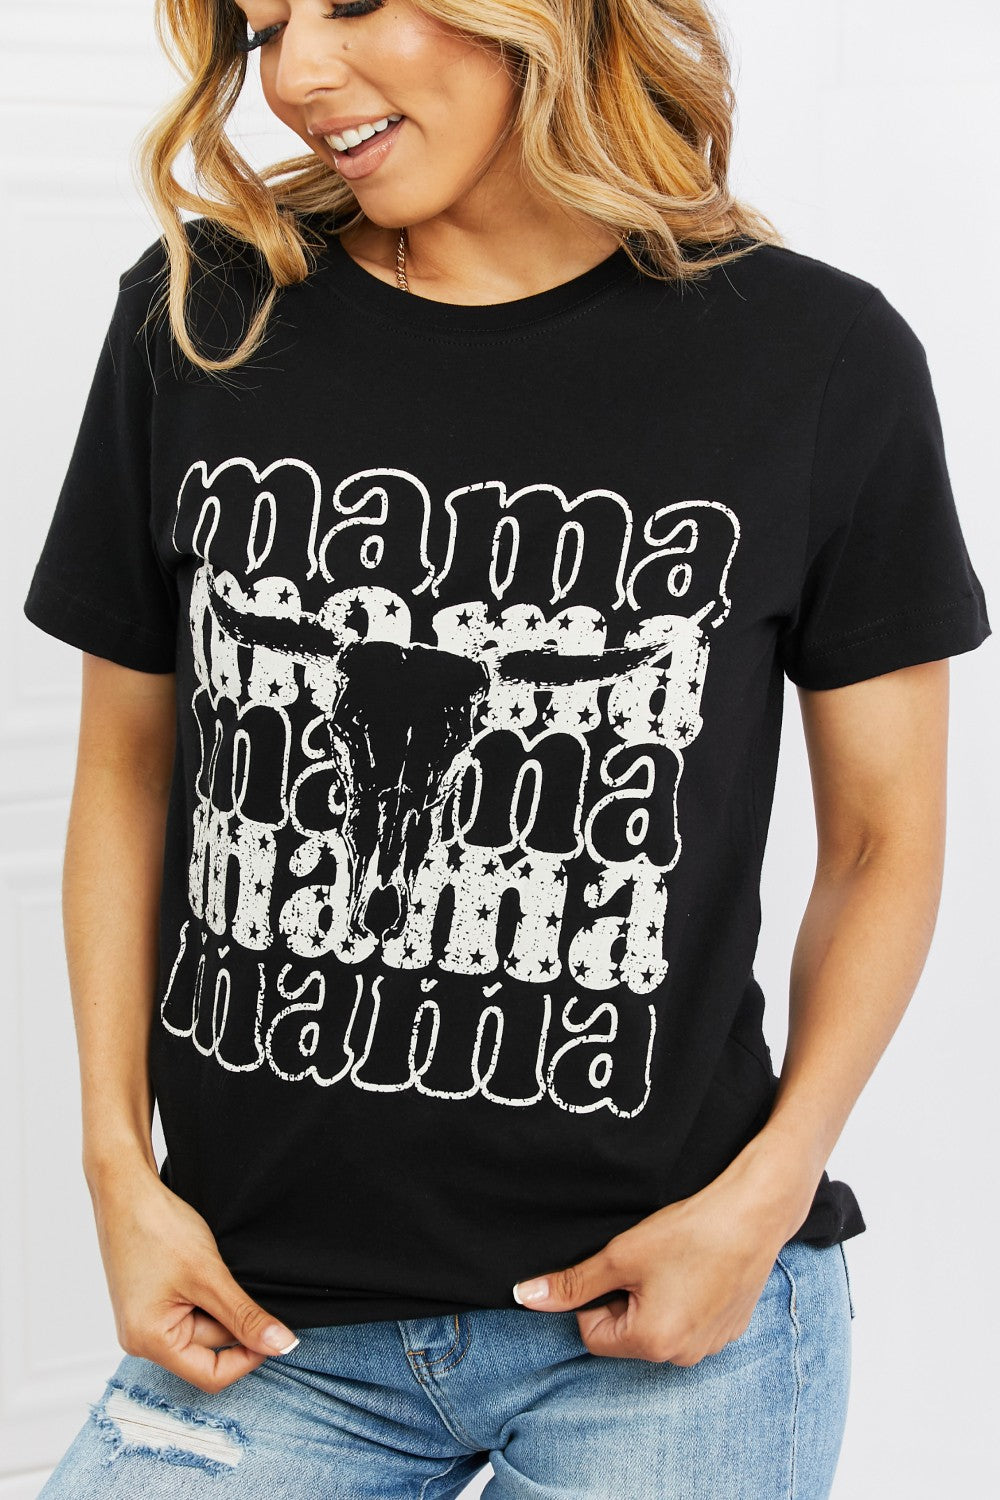 Retro Stacked Mama T-Shirt, Retro Mama T-Shirt, Stacked Mama T-Shirt, Retro T-Shirt, Stacked T-Shirt, Mama T-Shirt, Retro, Mama, Stacked